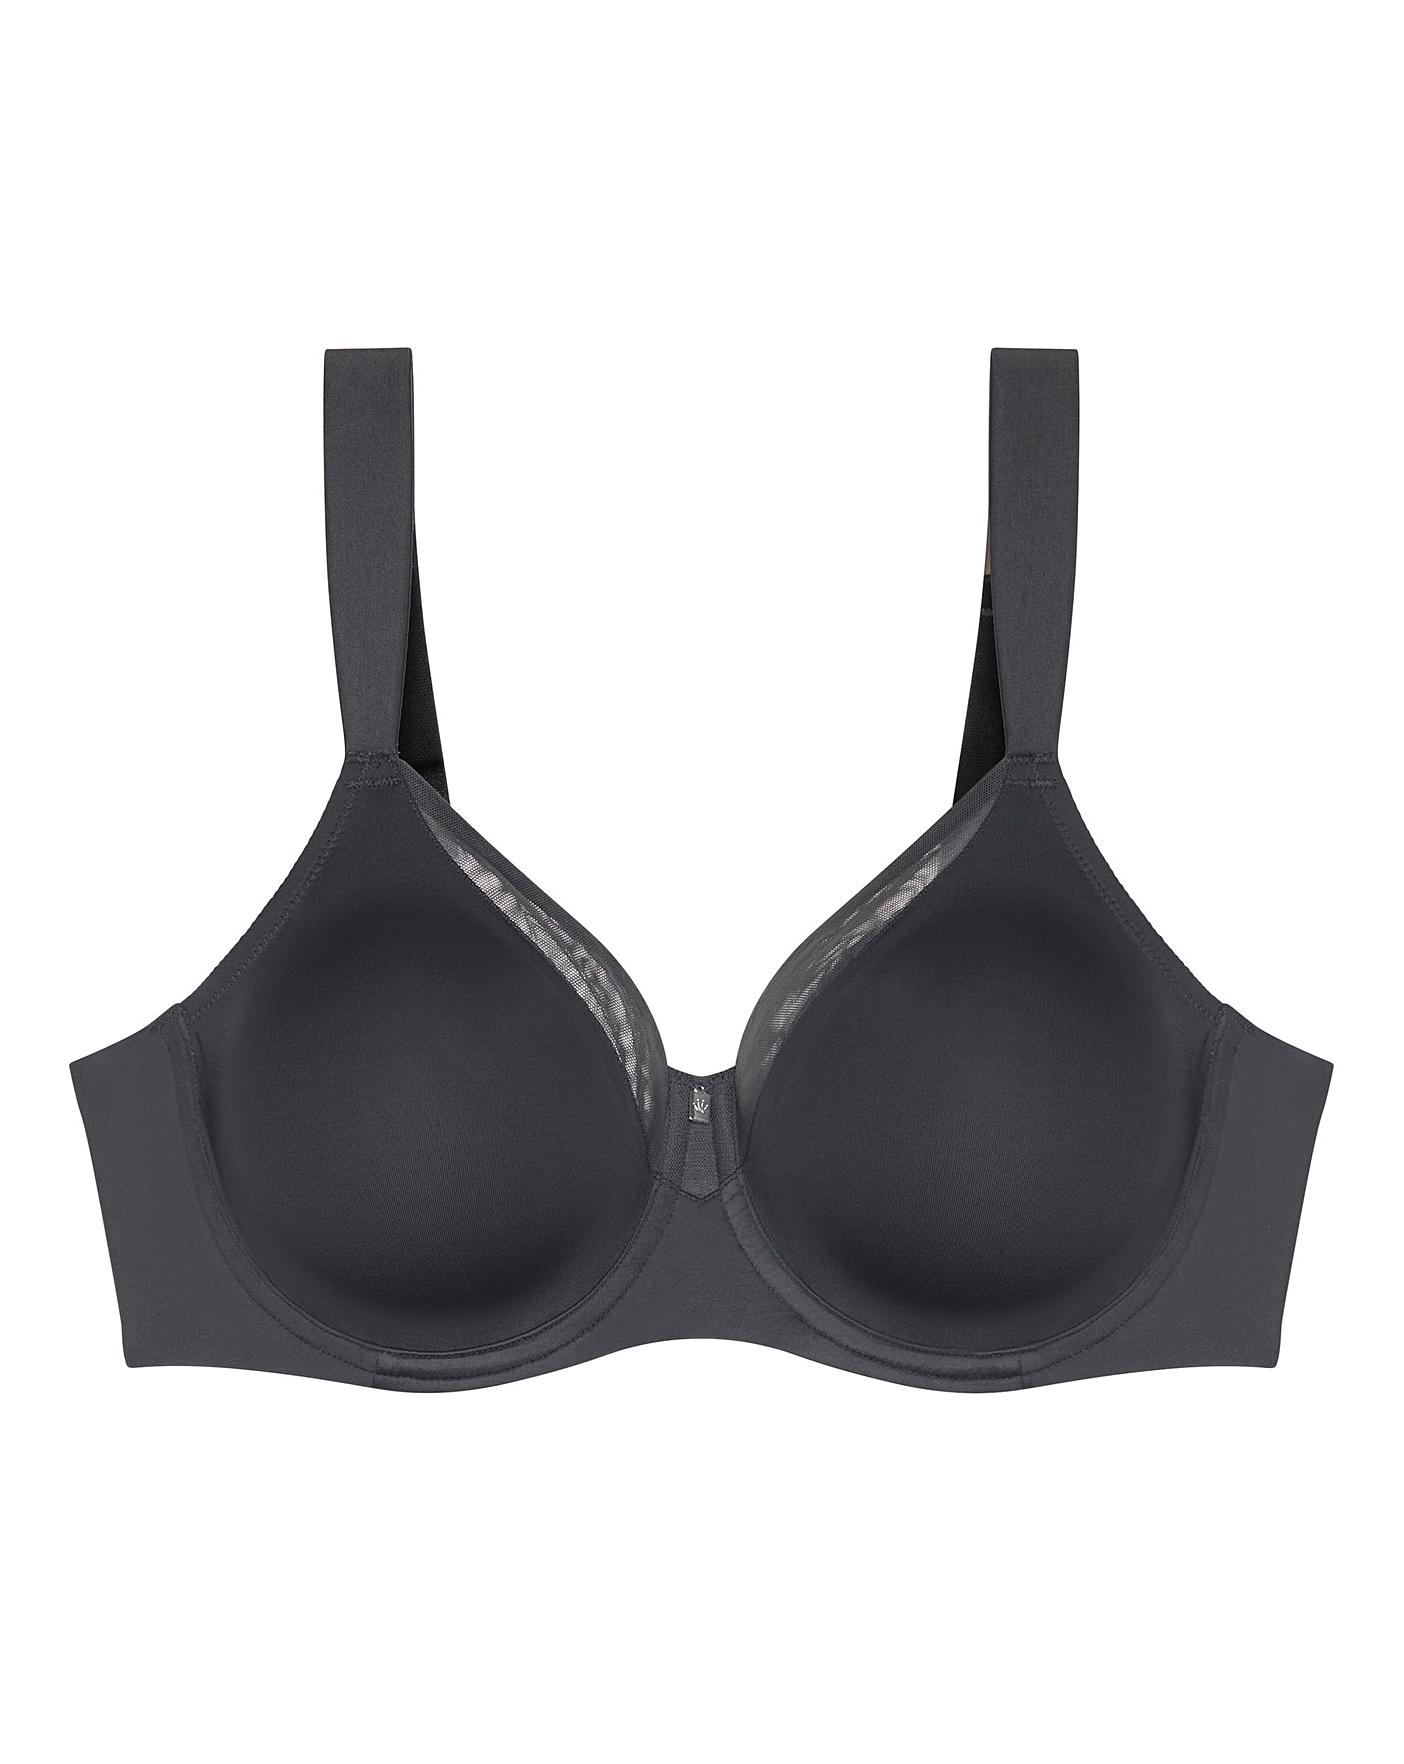 Airy sensation minimiser bra, black, Triumph